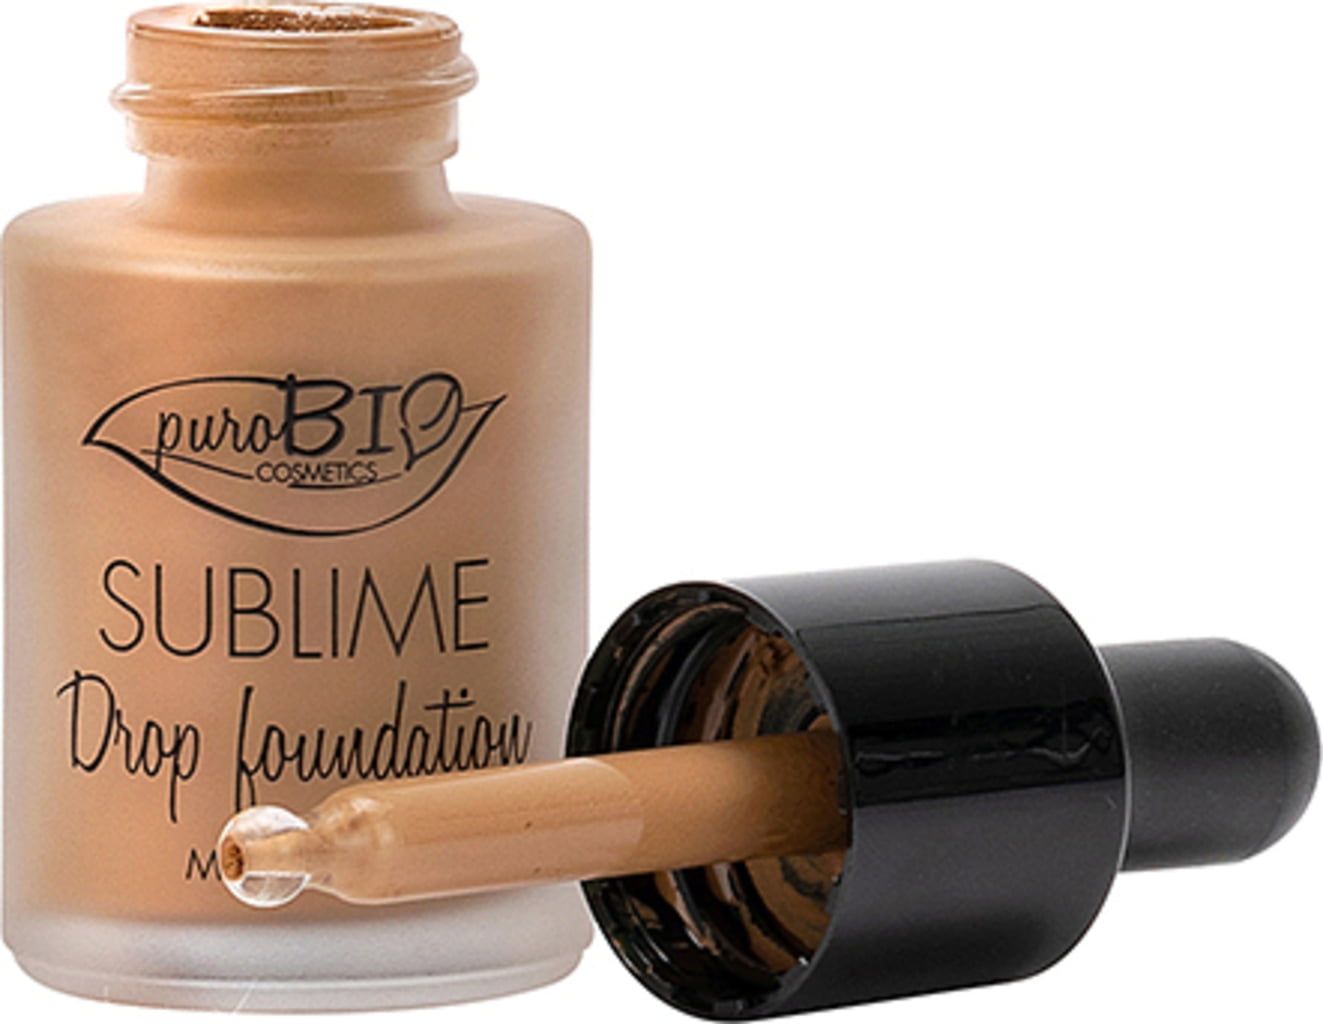 puroBIO cosmetics Sublime Drop Foundation - 06